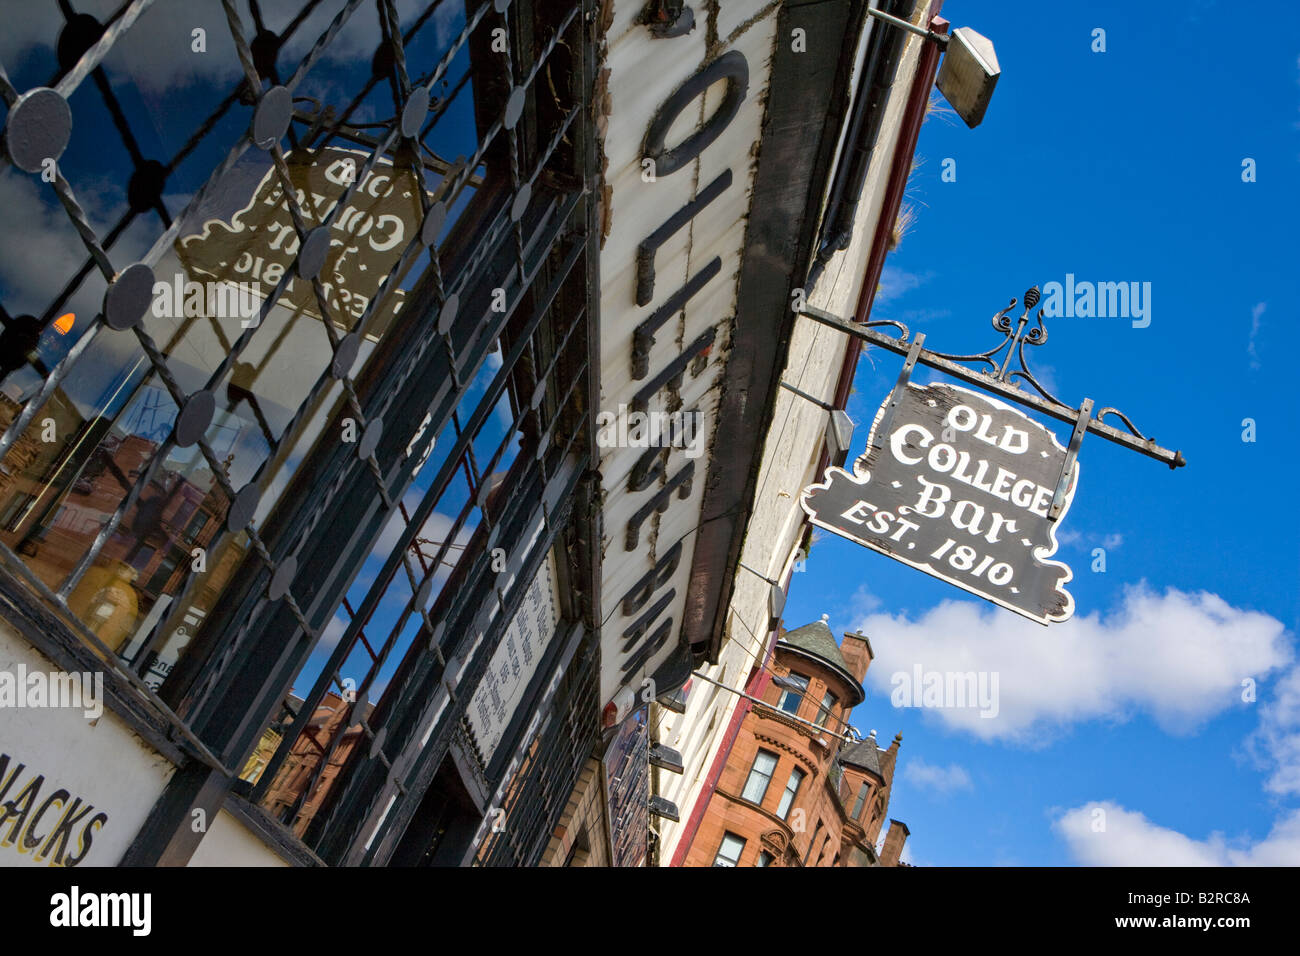 OLD COLLEGE BAR IN HIGH STREET GLASGOW SCOTLAND Stock Photo